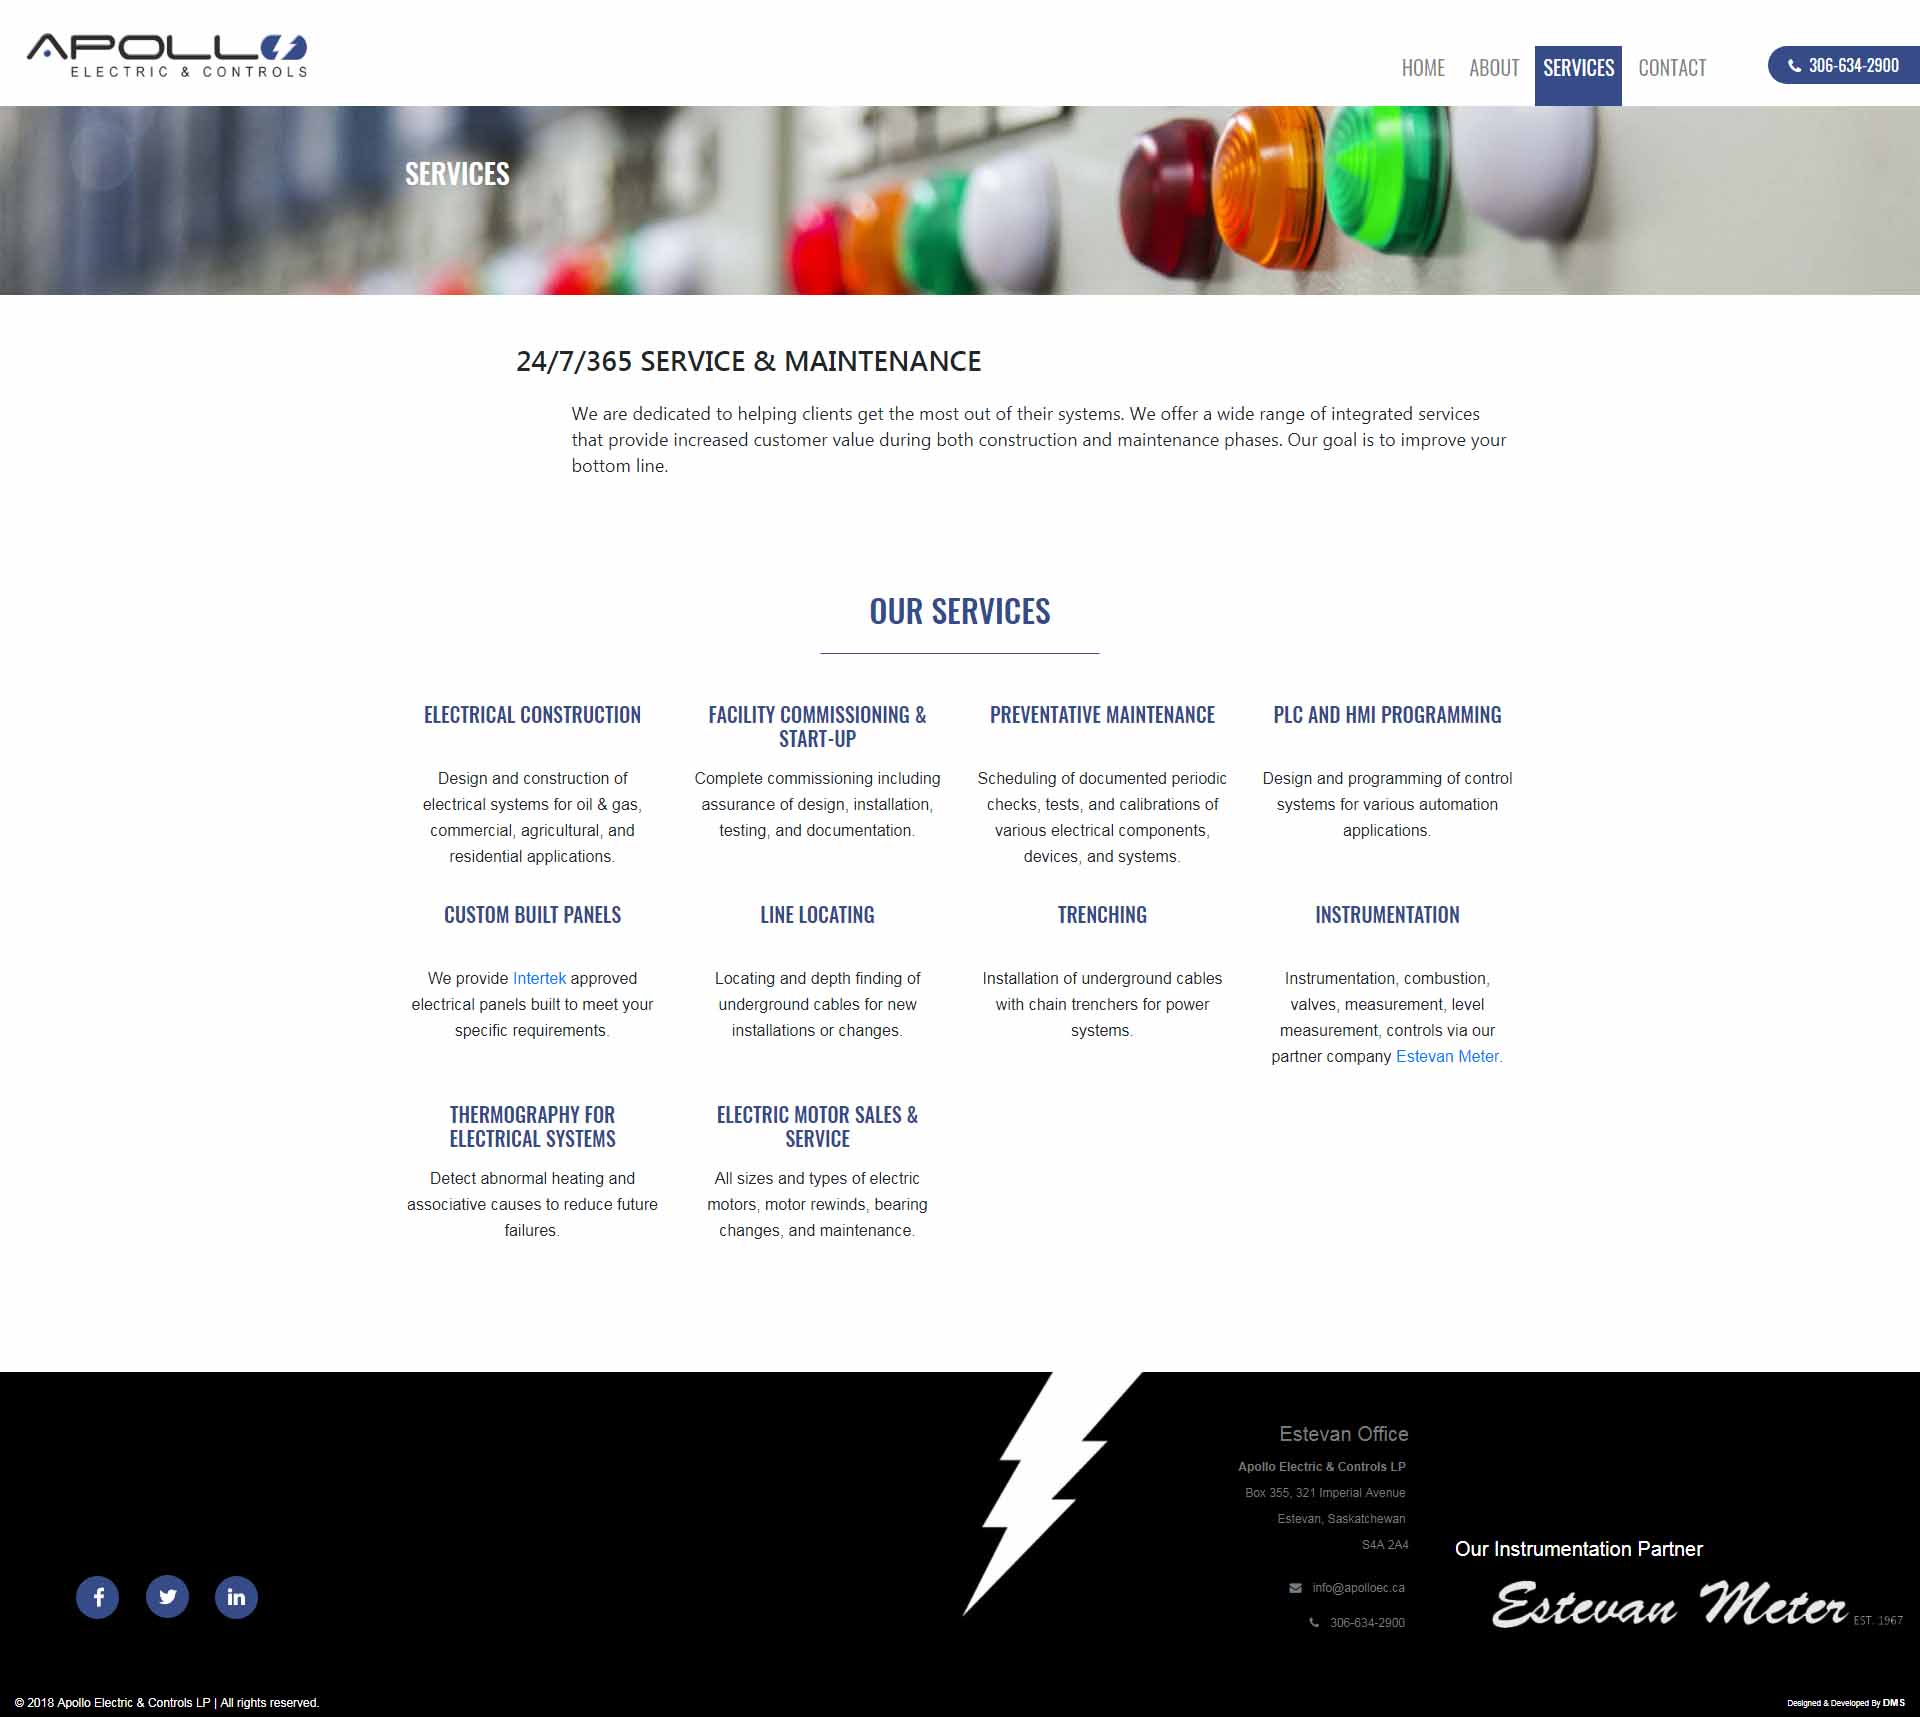 DMS Services Website Portfolio - Apollo Electric & Controls LP .